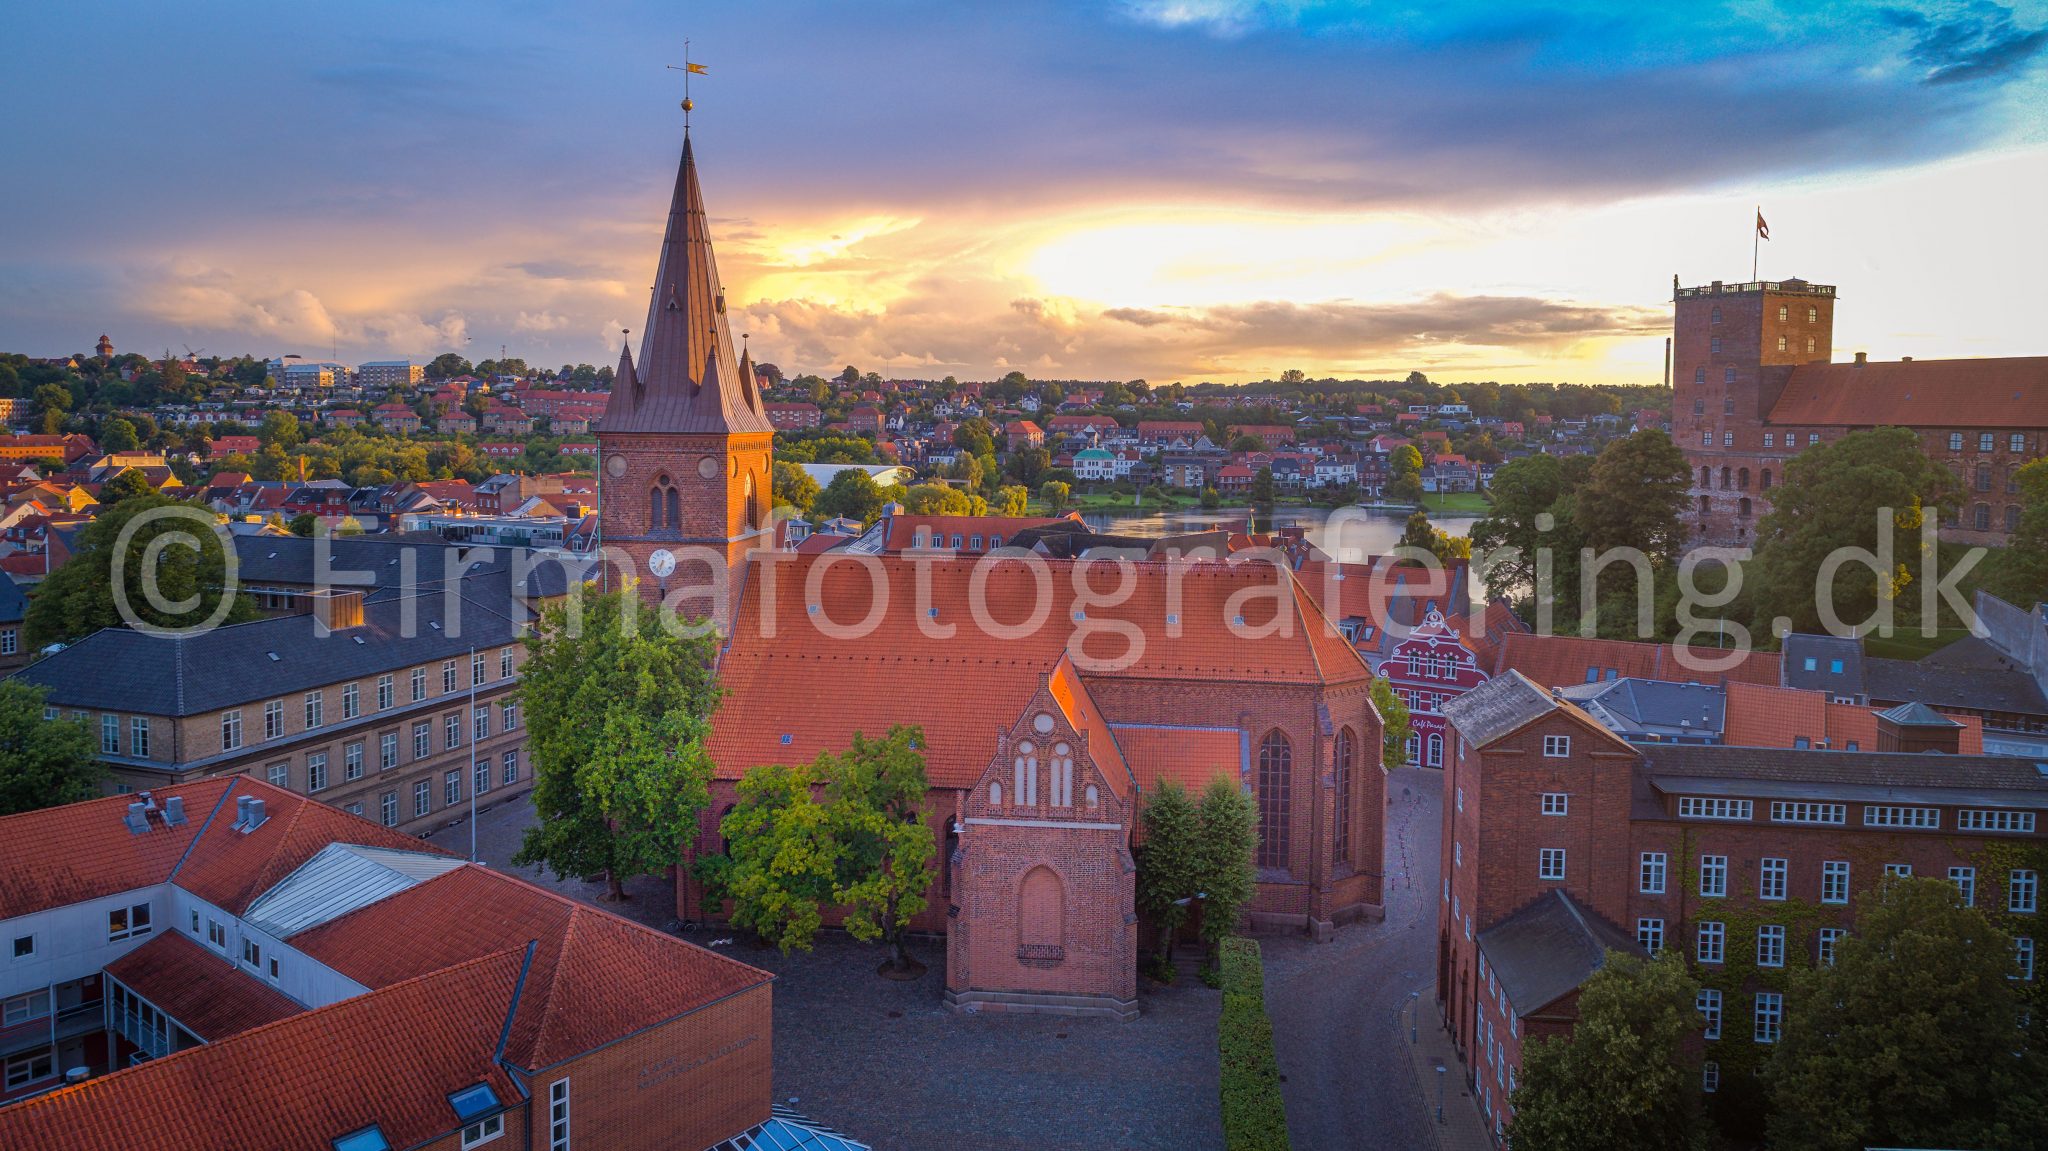 Luftfoto af Sct Nicolai kirke